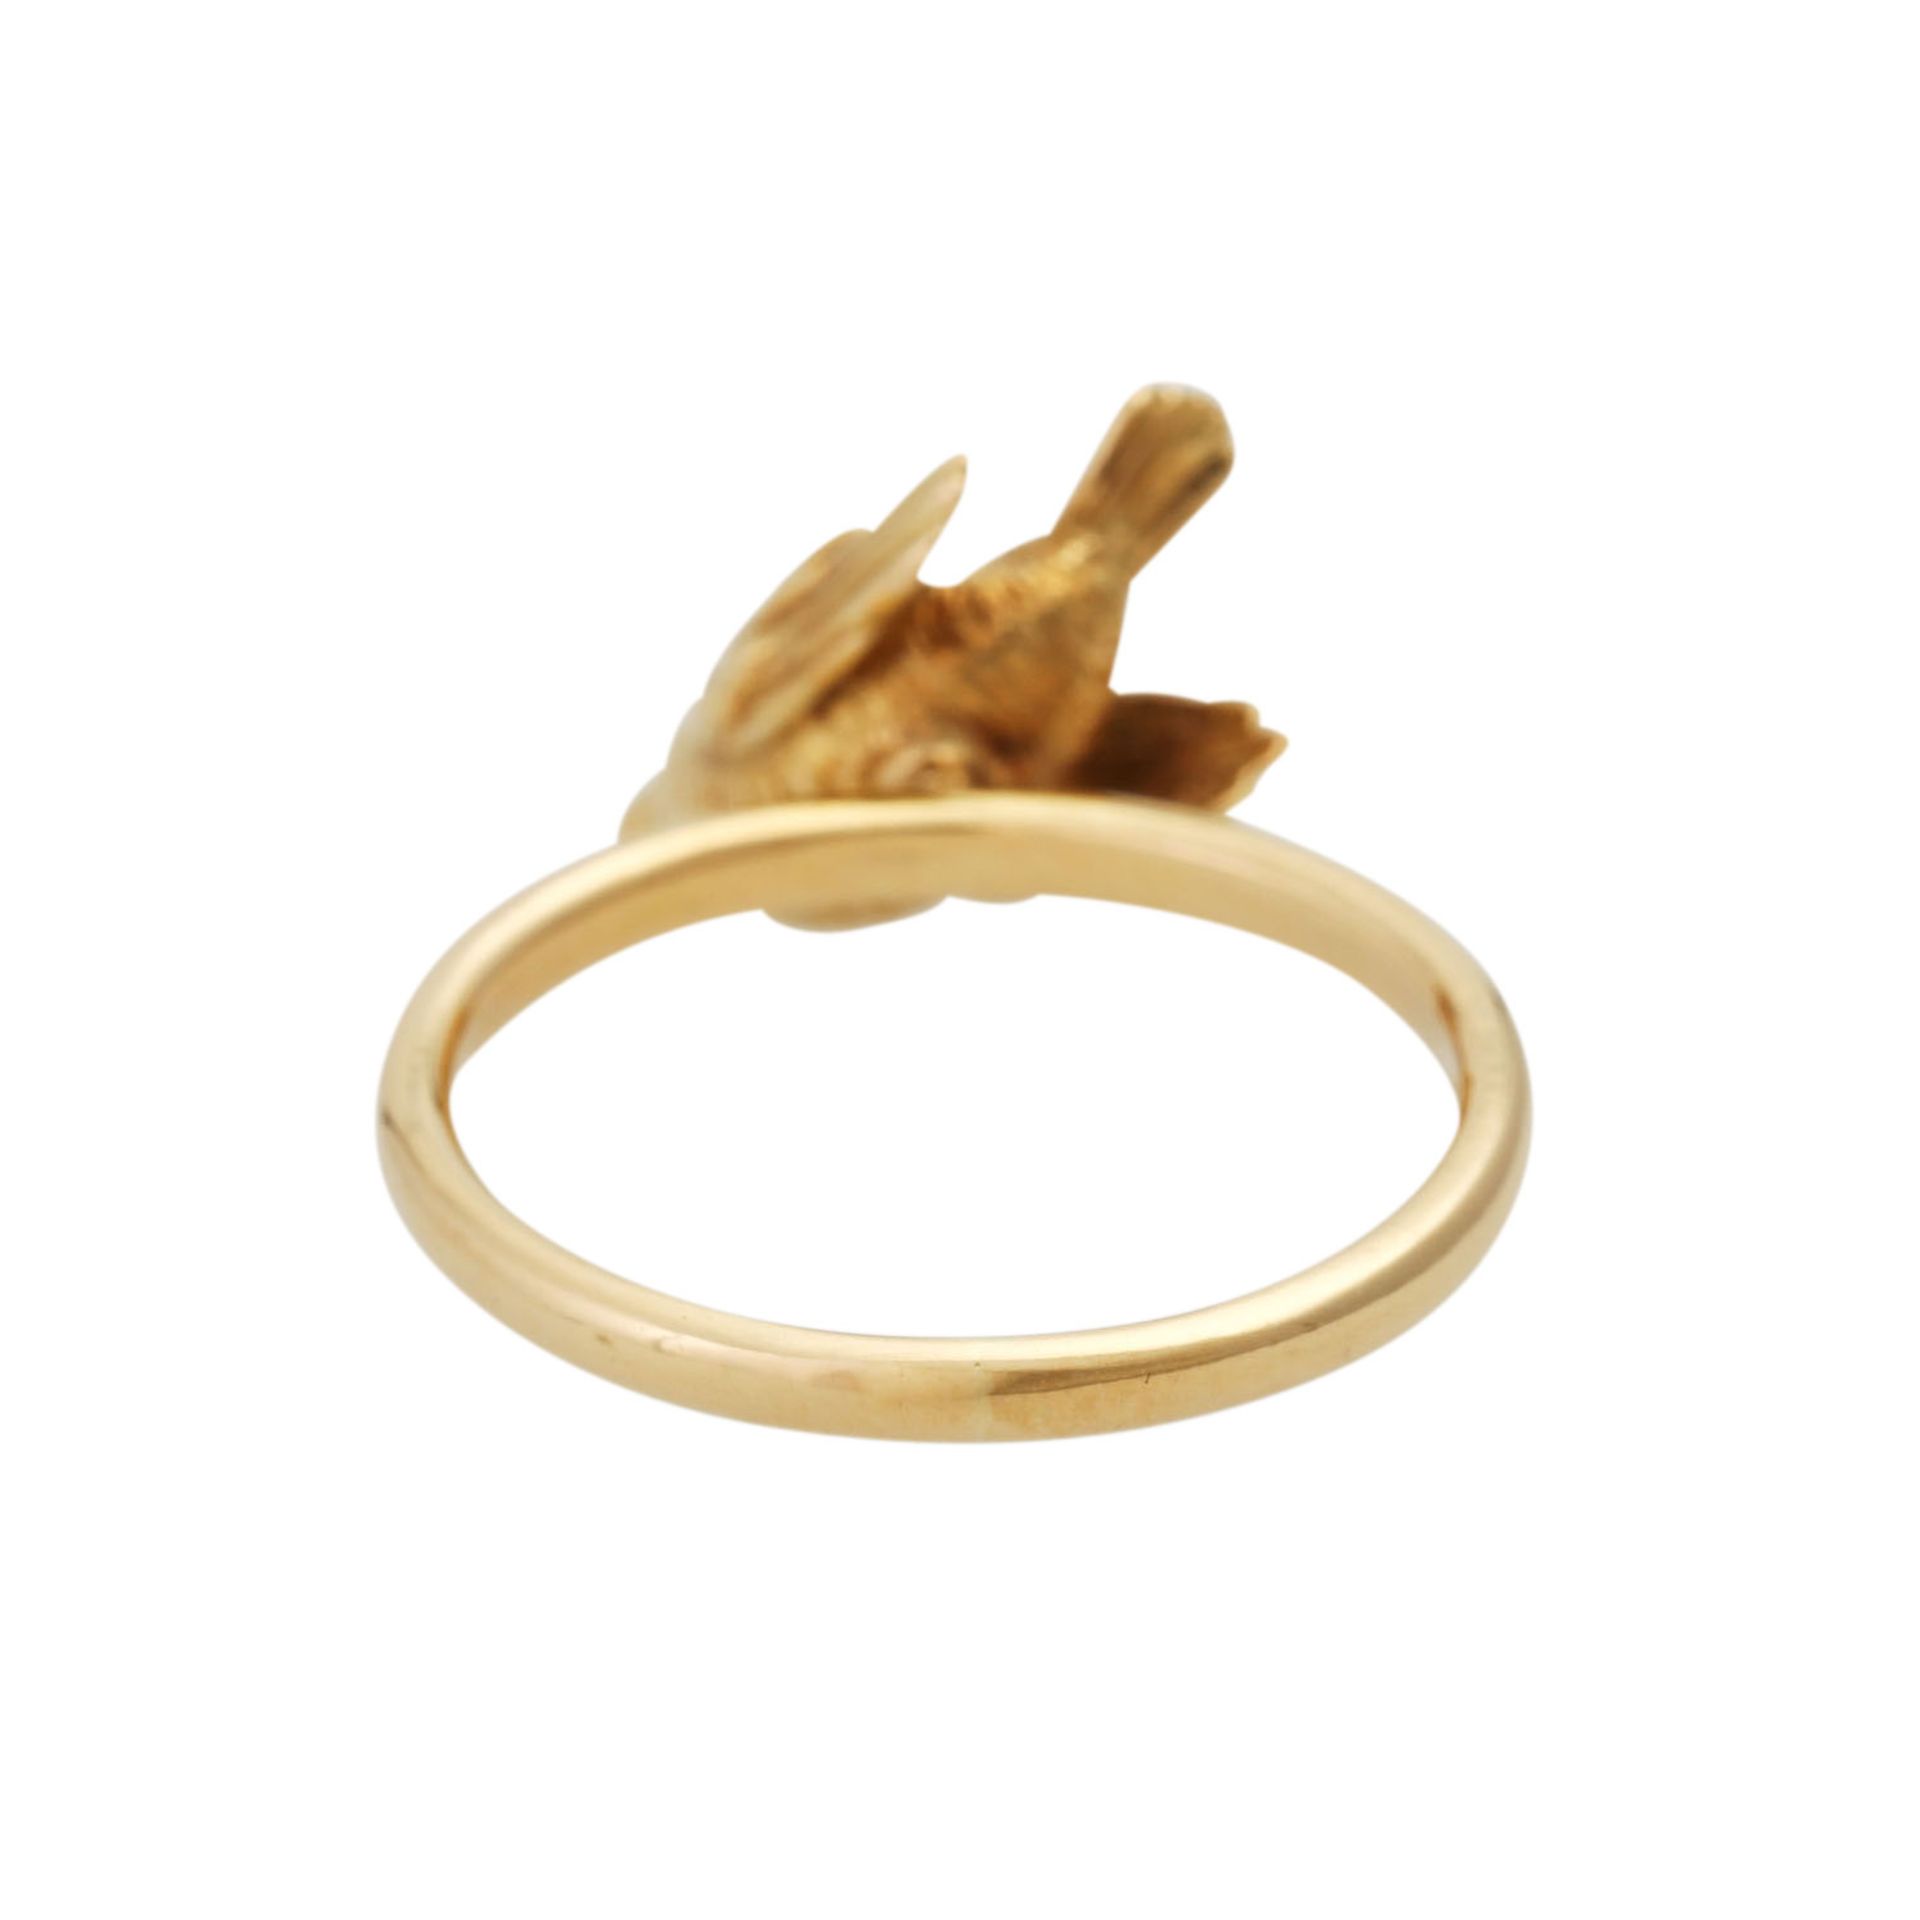 NIESSING Ring "Vogel"in GG 18K. RW: ca. 49,5. Ende 20. Jh. Minim. Tragespuren.NIESSING ring " - Image 4 of 4